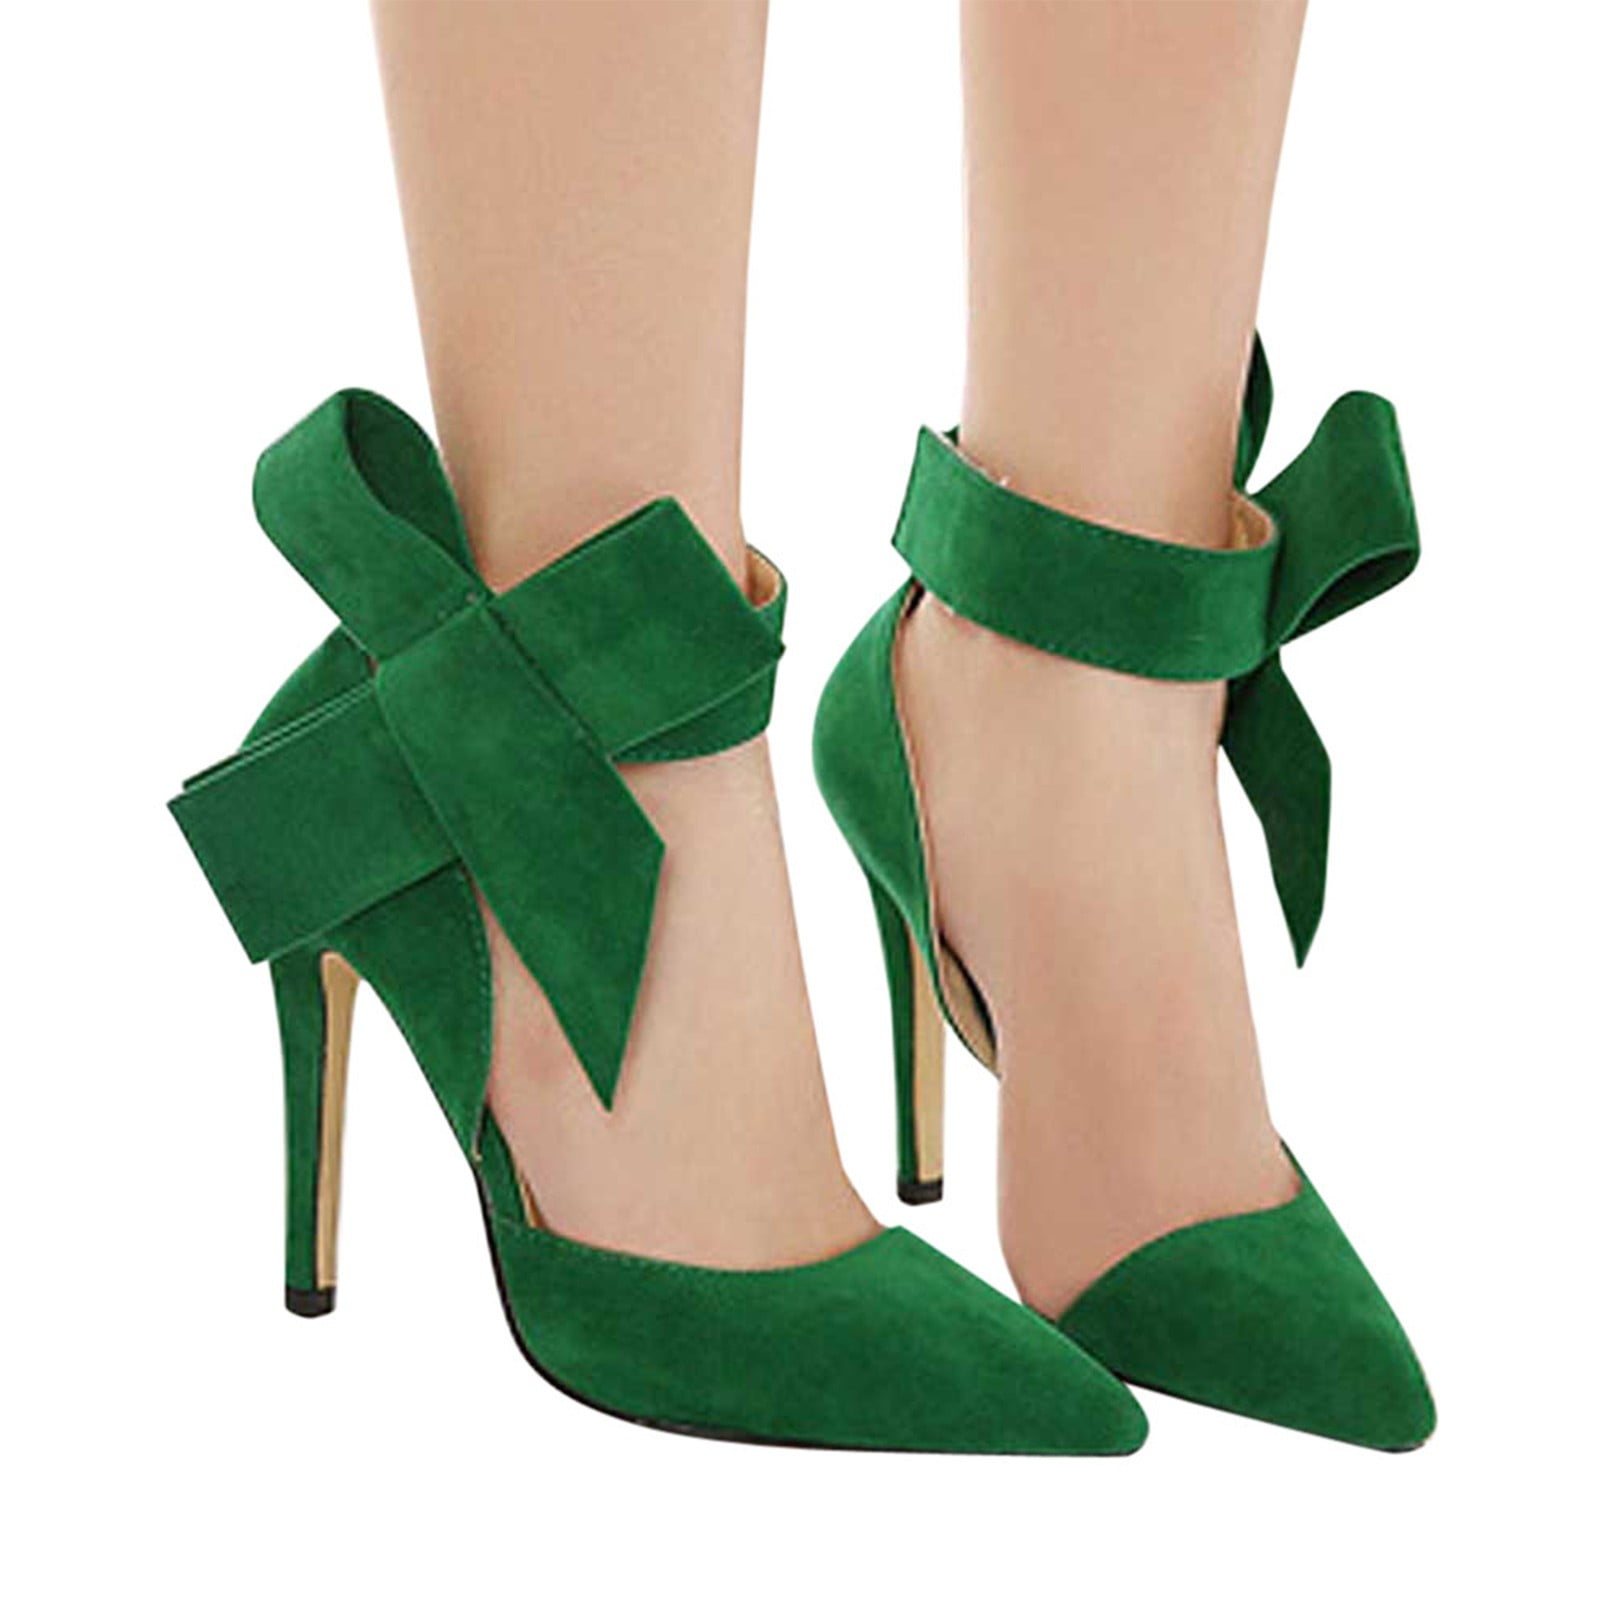 TUOBARR Heels Sandals Women, Women's Fashion Pointed Toe High Heel ...